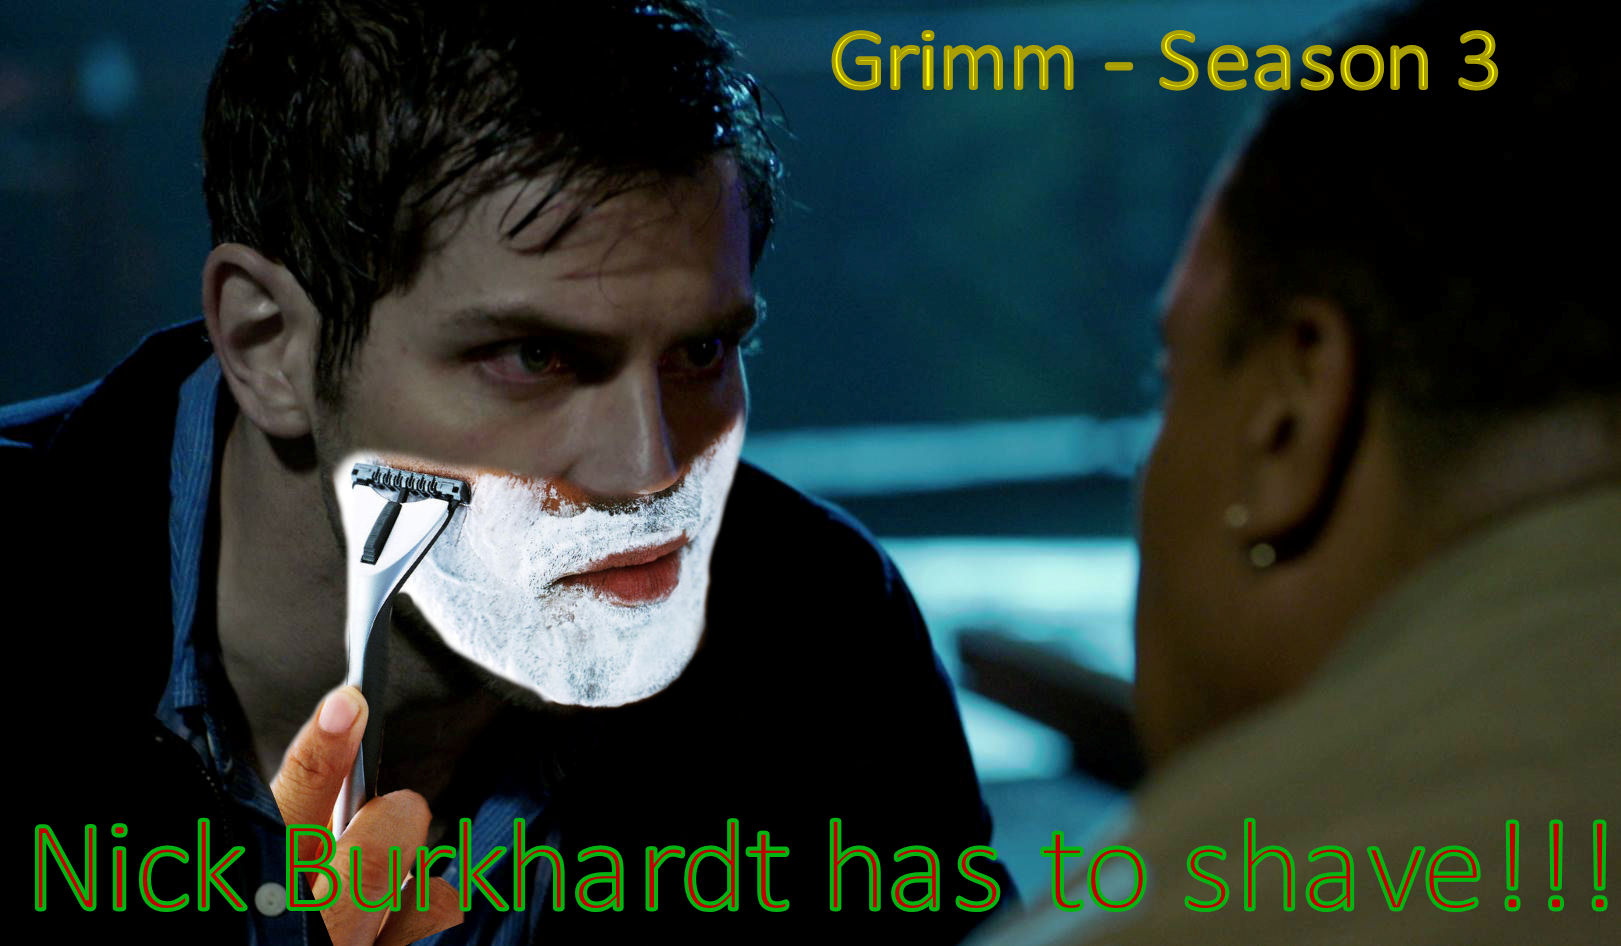 Grimm - Season 3 - Nick Burkhardt has to shave